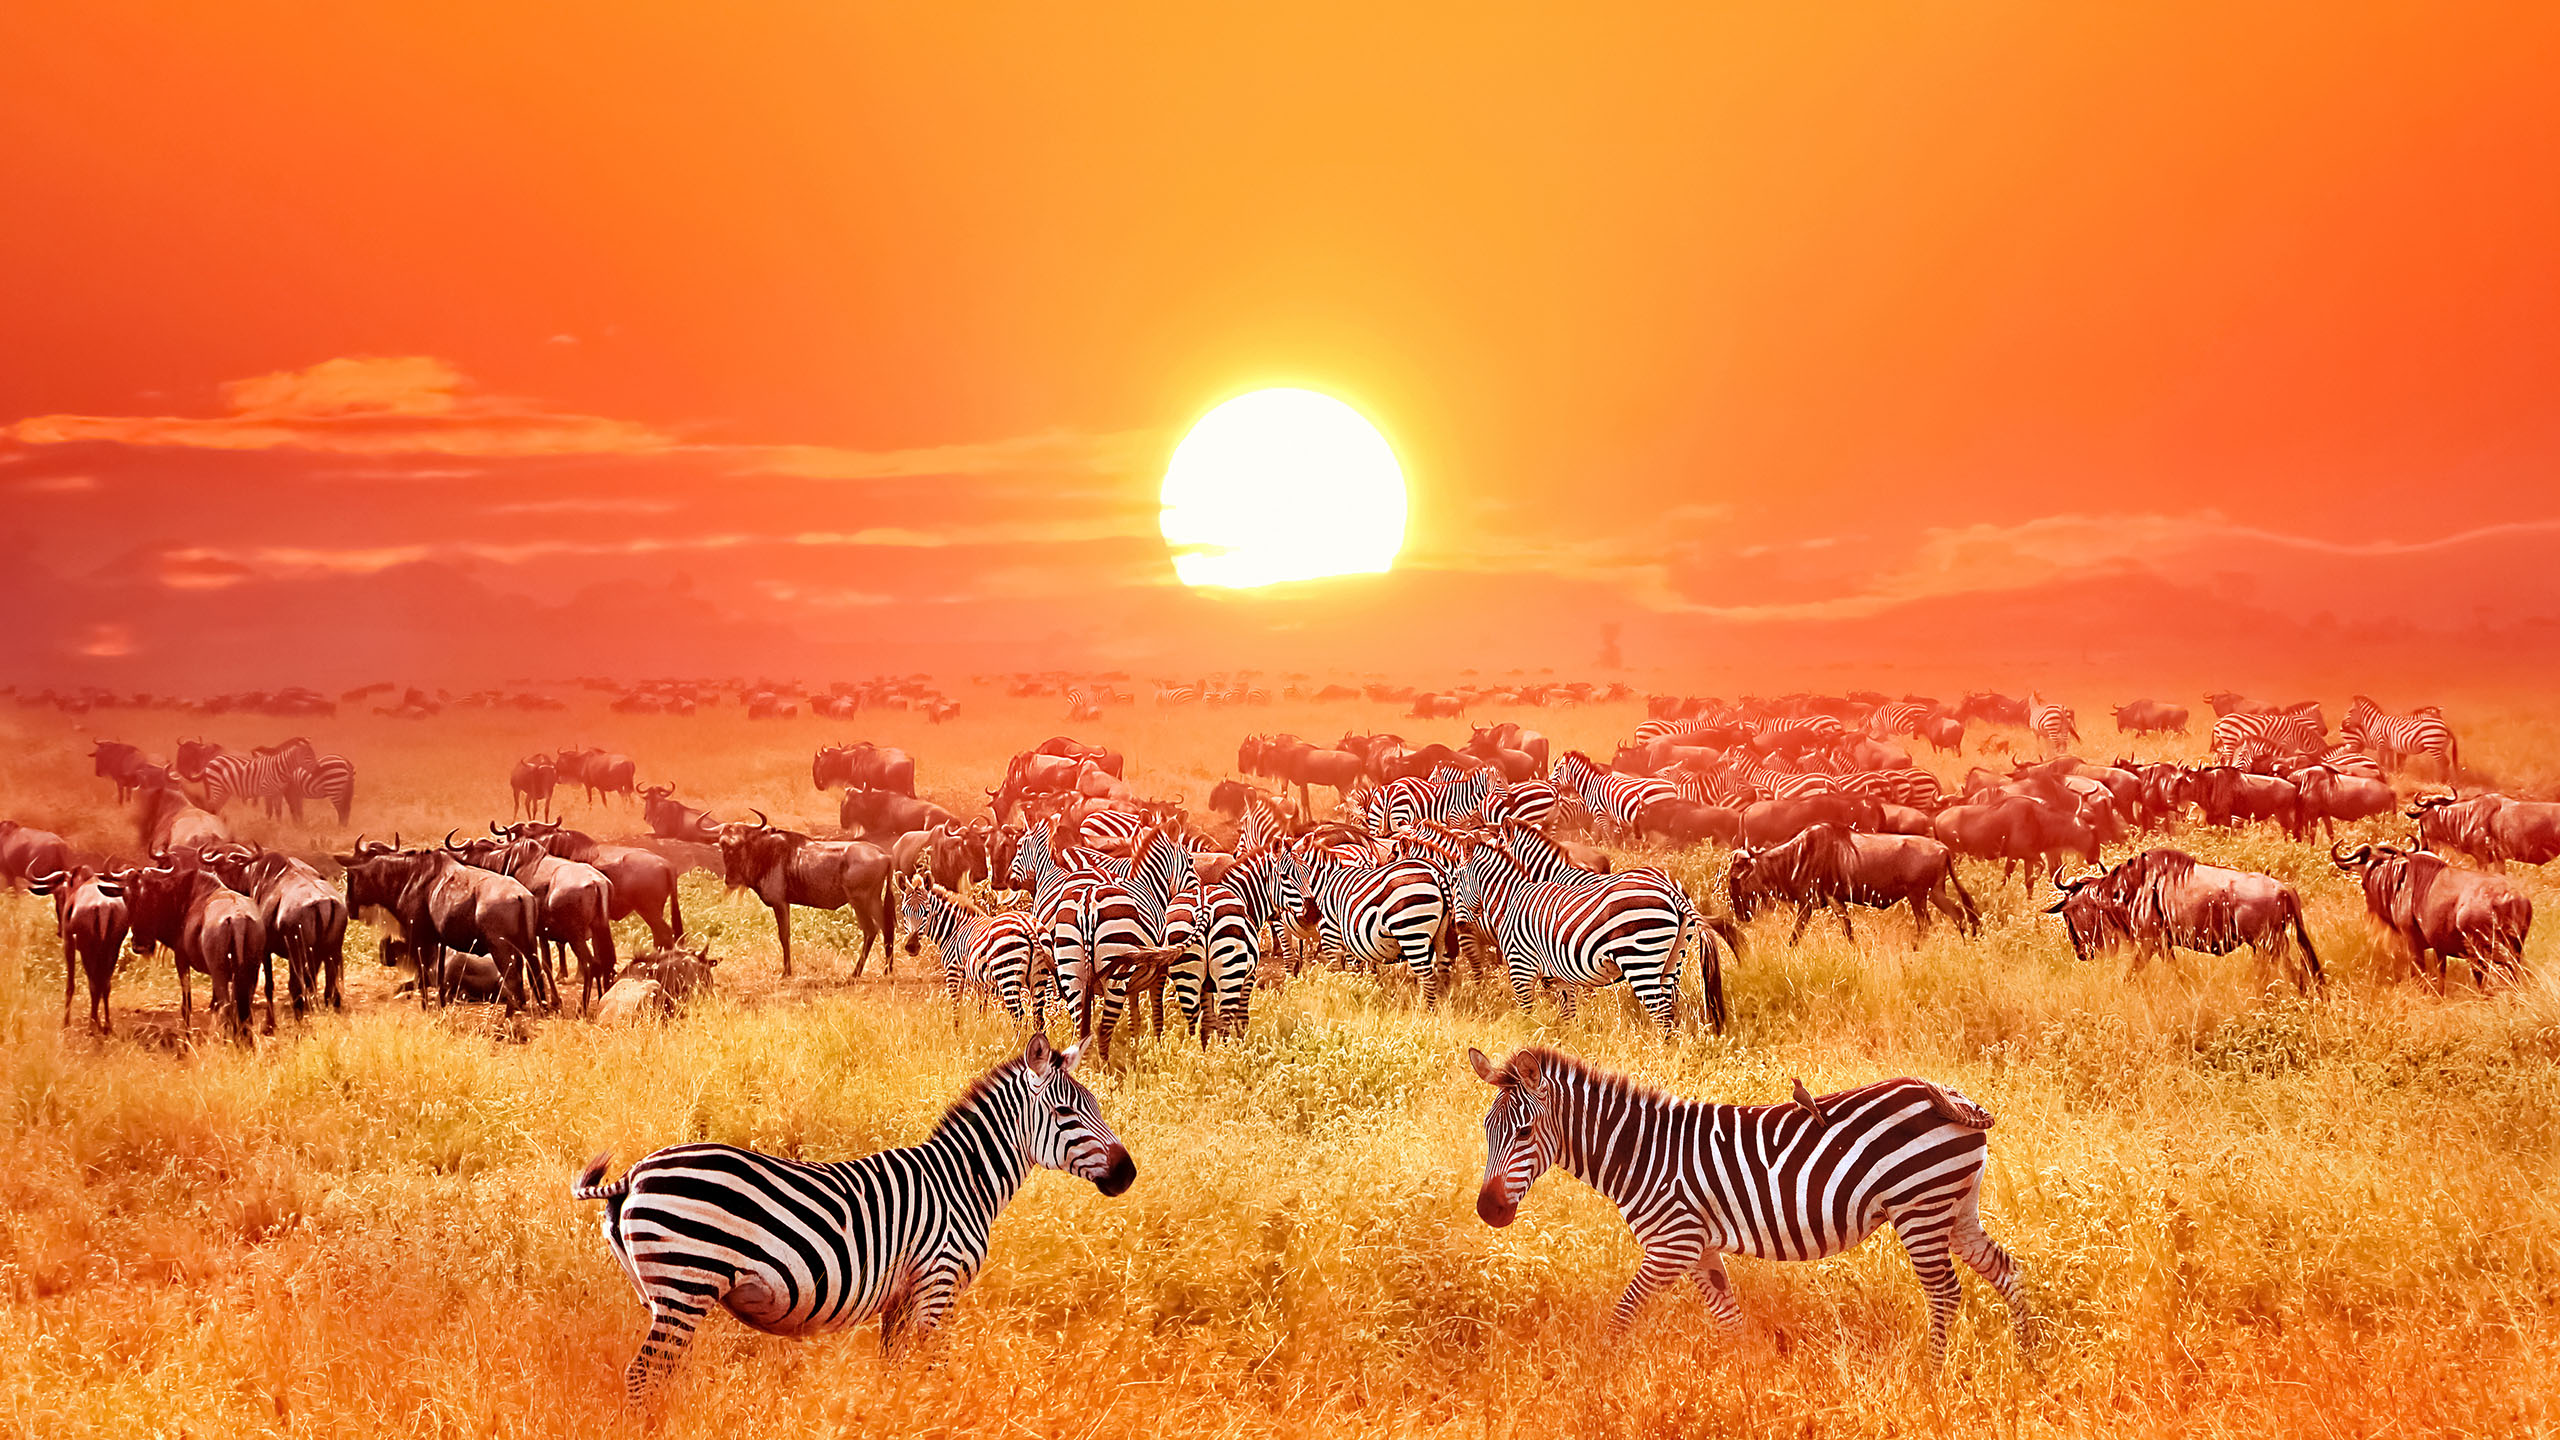 Zebras and antelopes at sunset in african savannah. Serengeti national park. Tanzania. Wild nature of Africa.